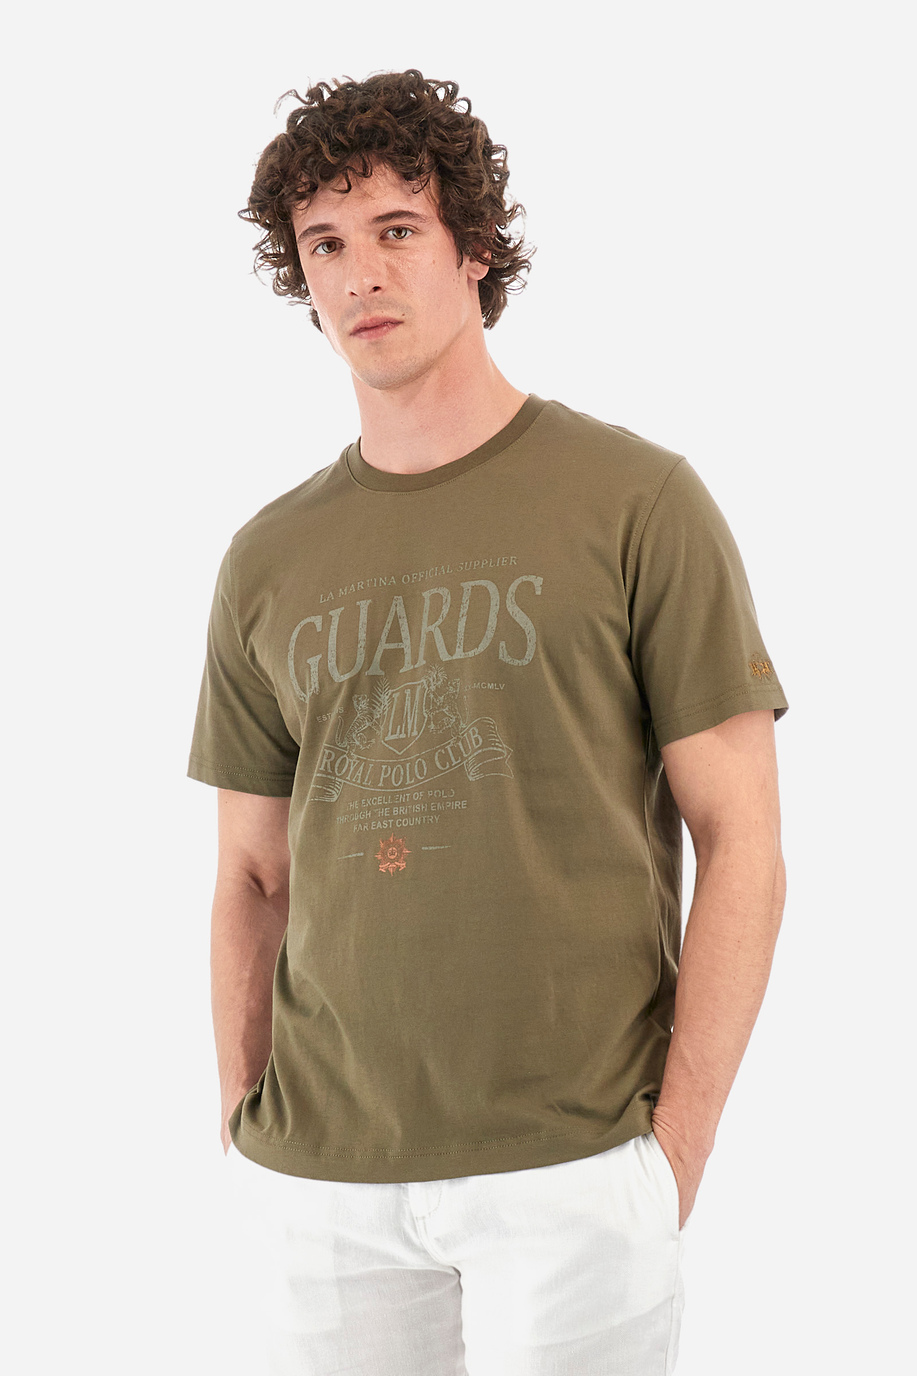 T-shirt regular fit in cotone - Yu - Guards - England | La Martina - Official Online Shop